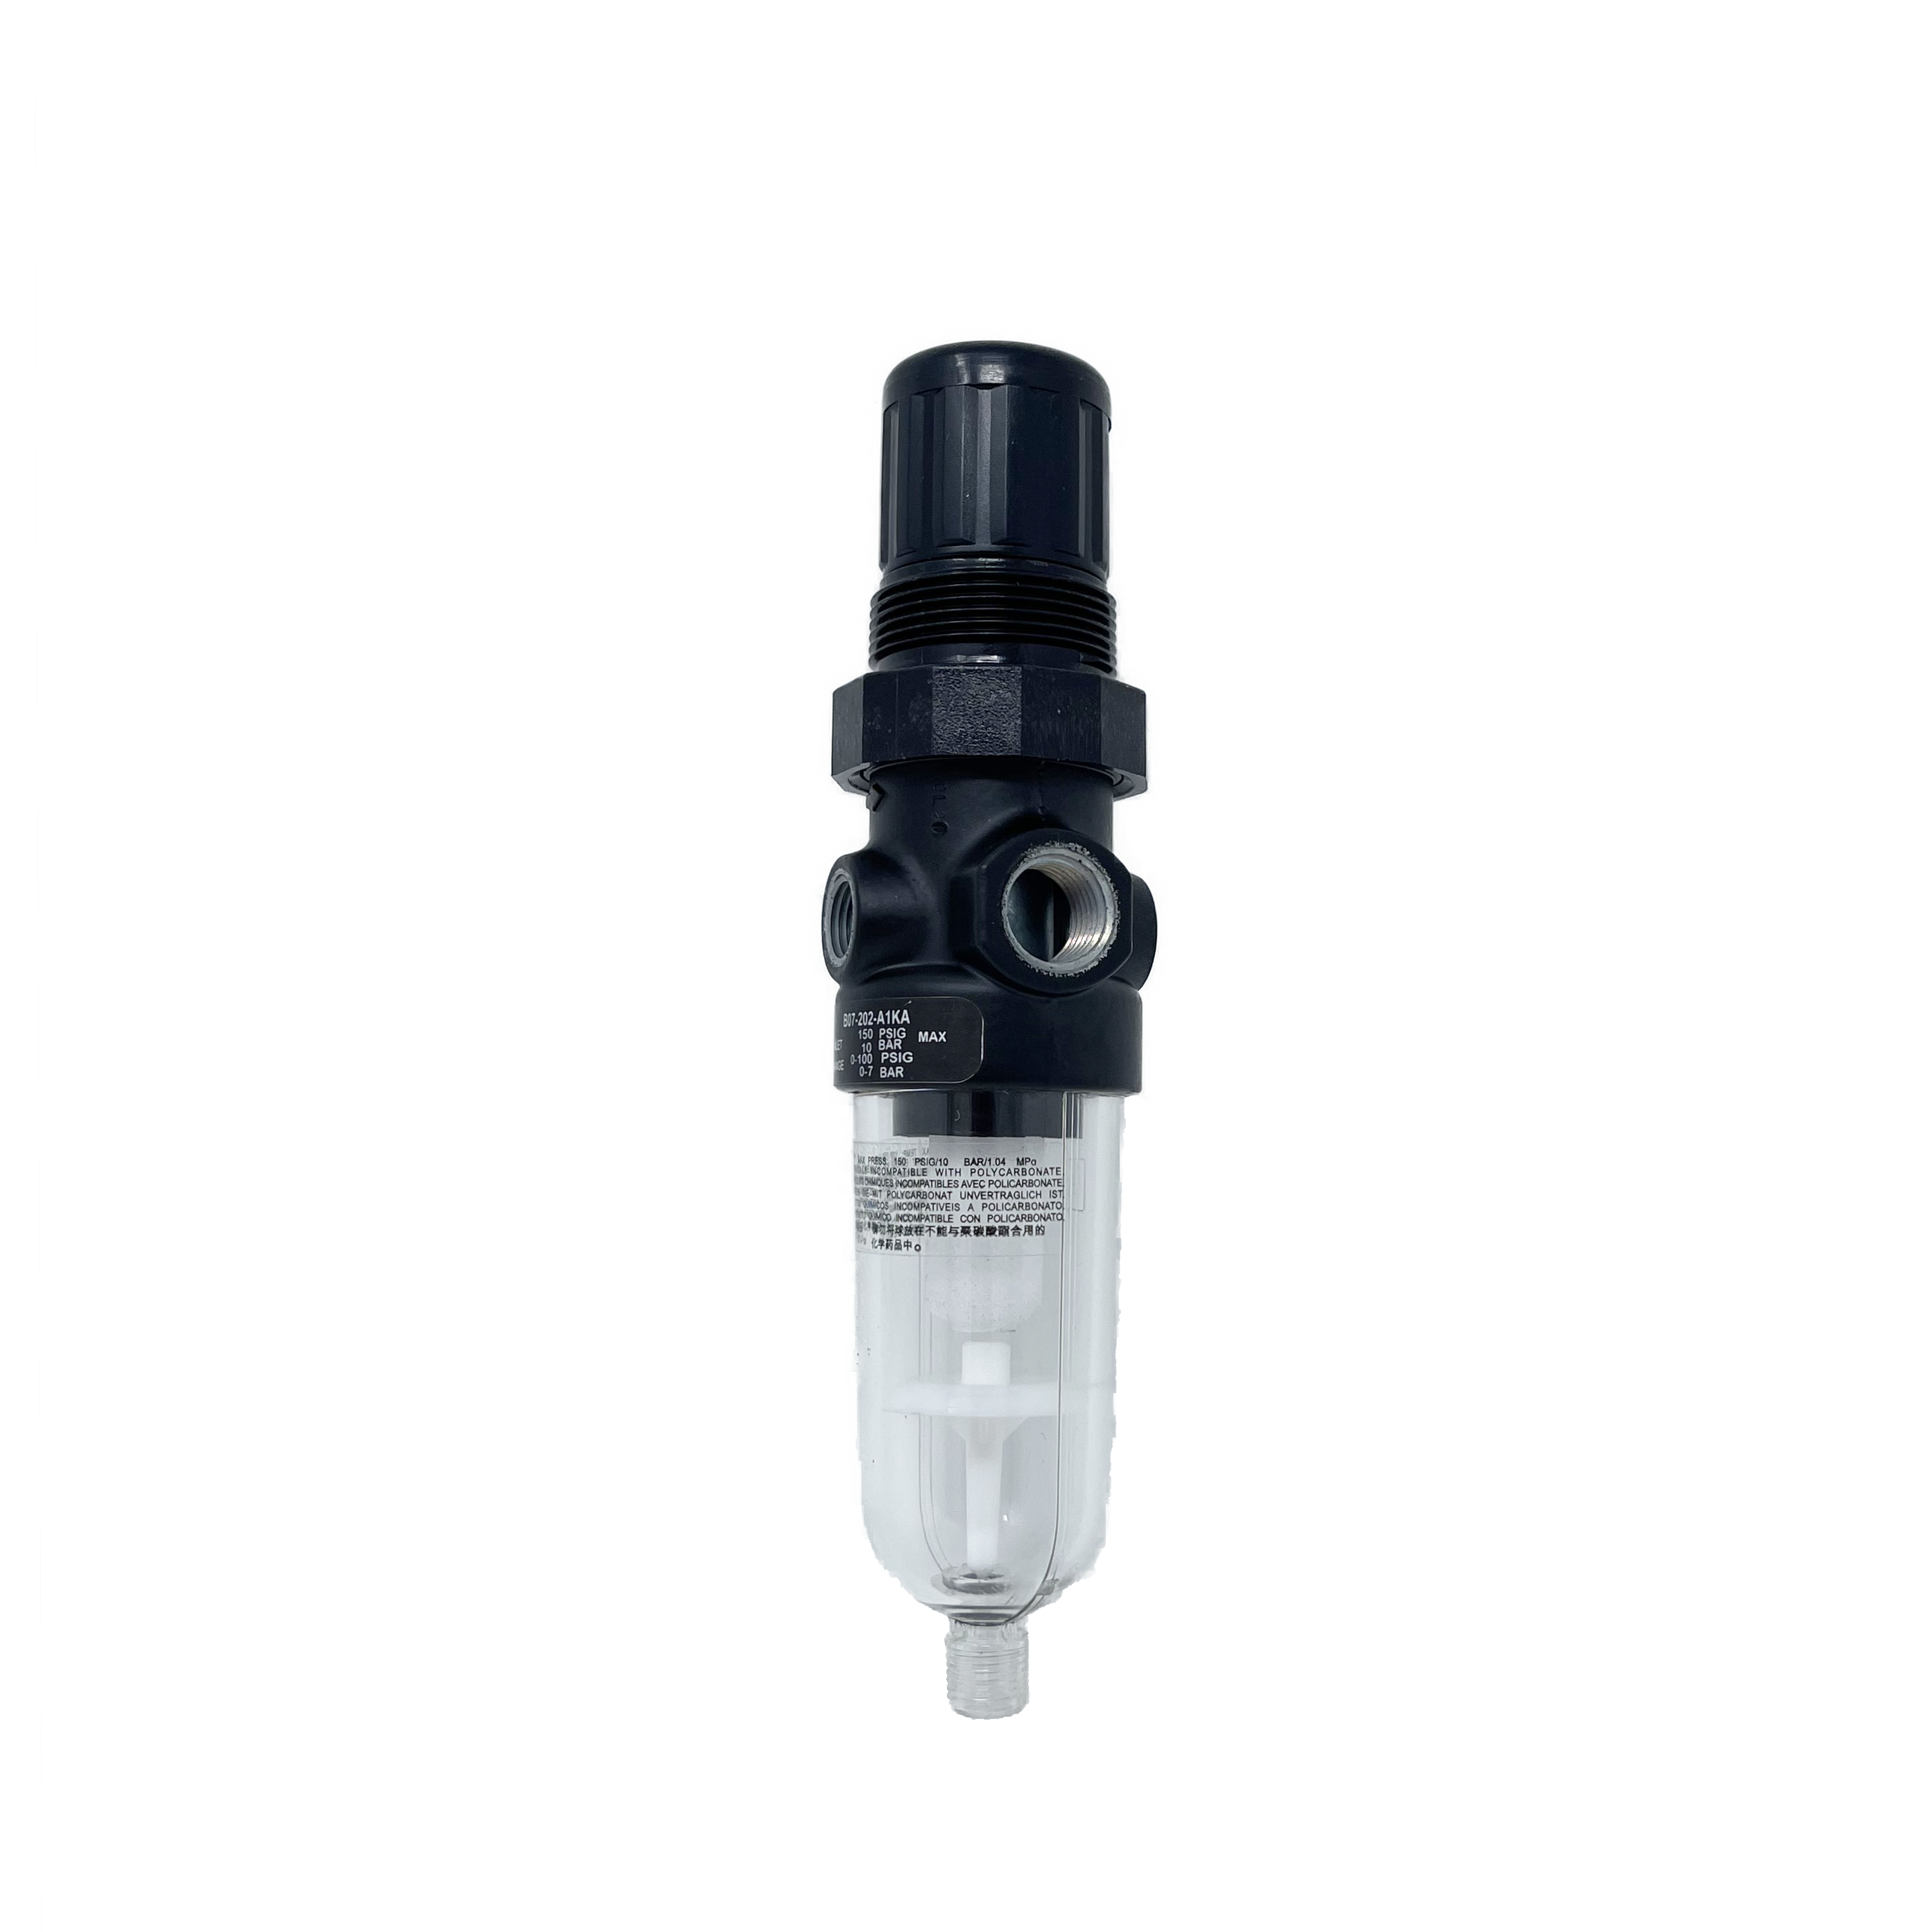 B07-201-M1EA : Norgren B07 miniature filter/regulator, Transparent Bowl, Relieving, Without Gauge, Manual Drain, 5-Micron, 5 to